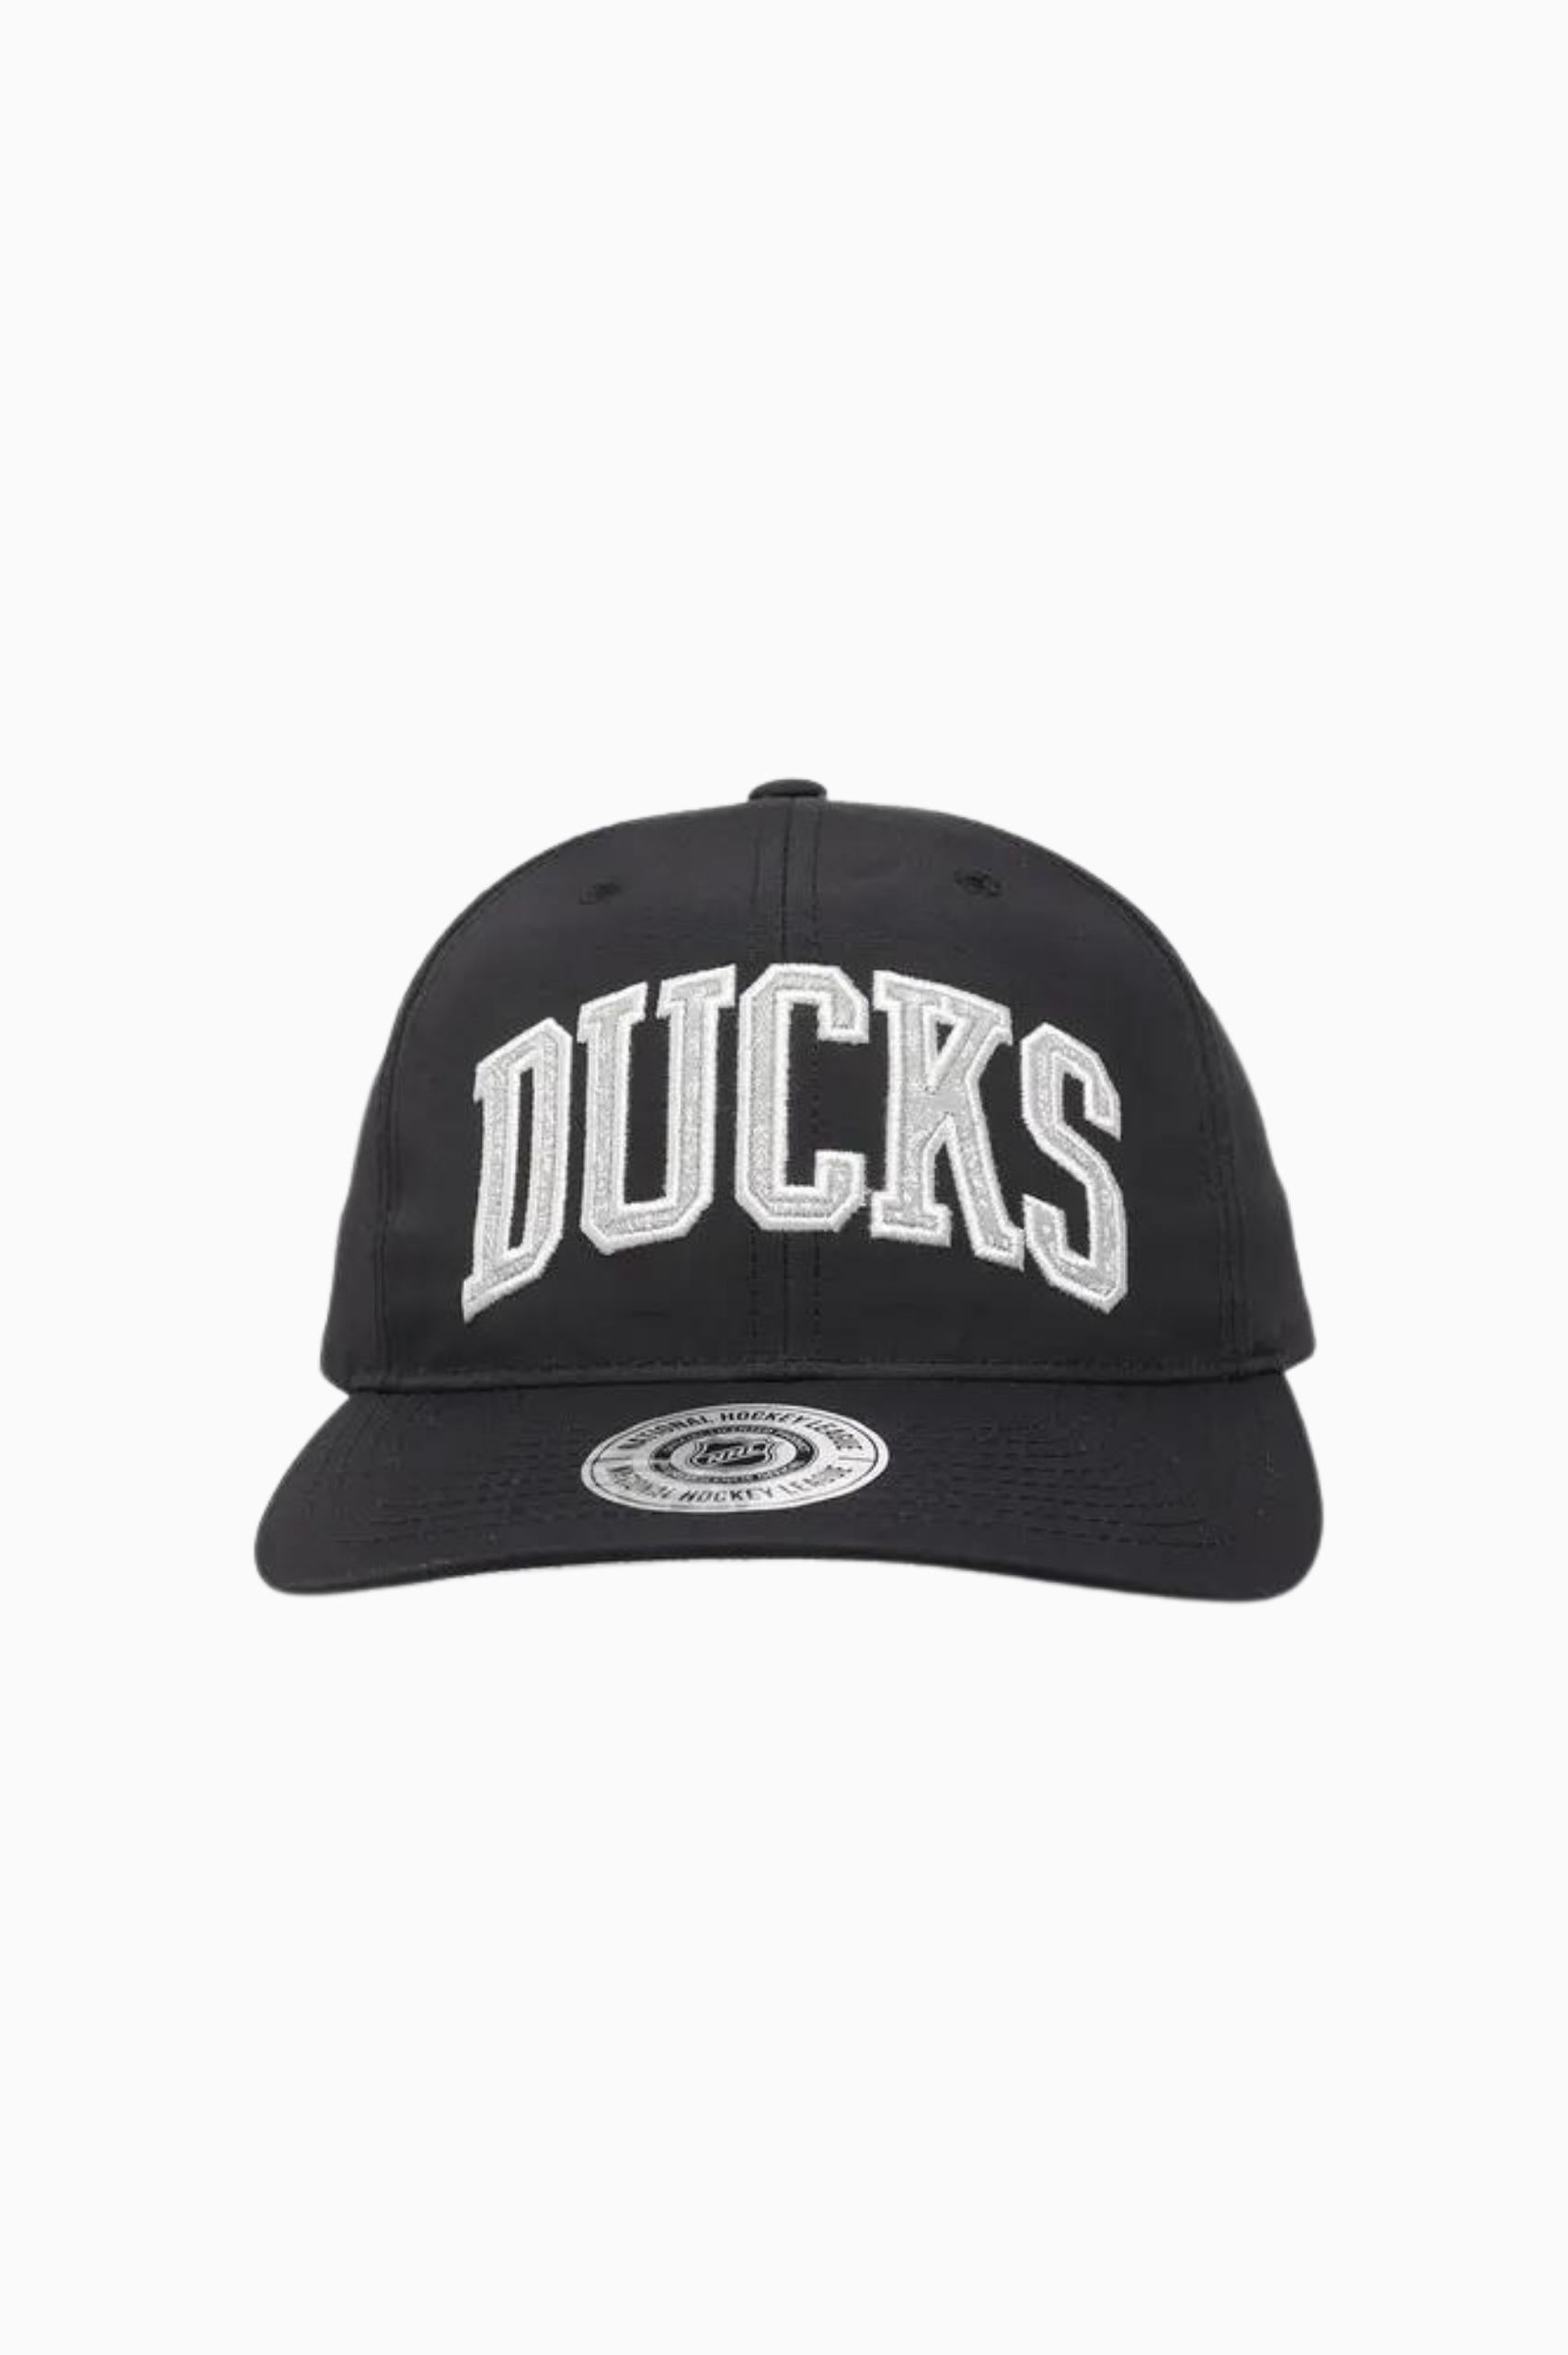 Majestic Men's NHL Paisley Wordmark Ducks Deadstock Hat - SAMPLE